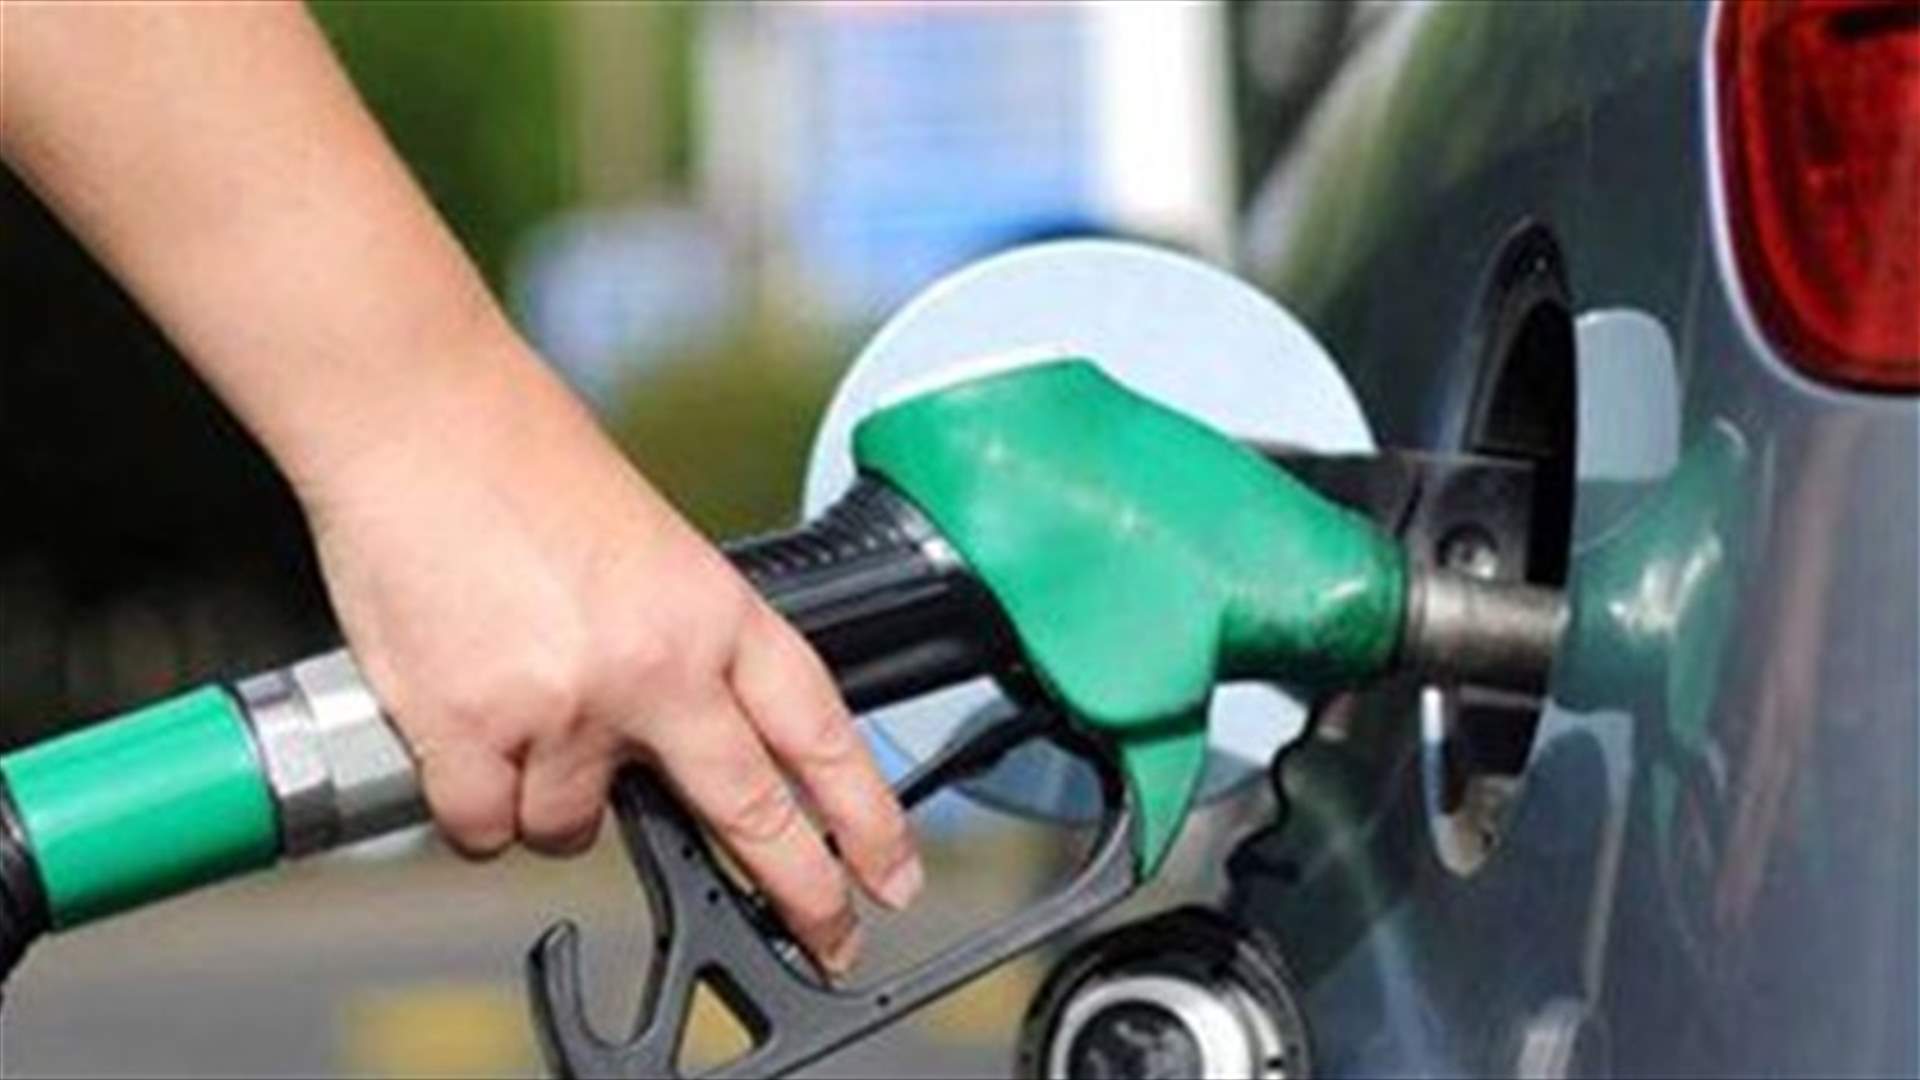 Prices of octane fuel drop